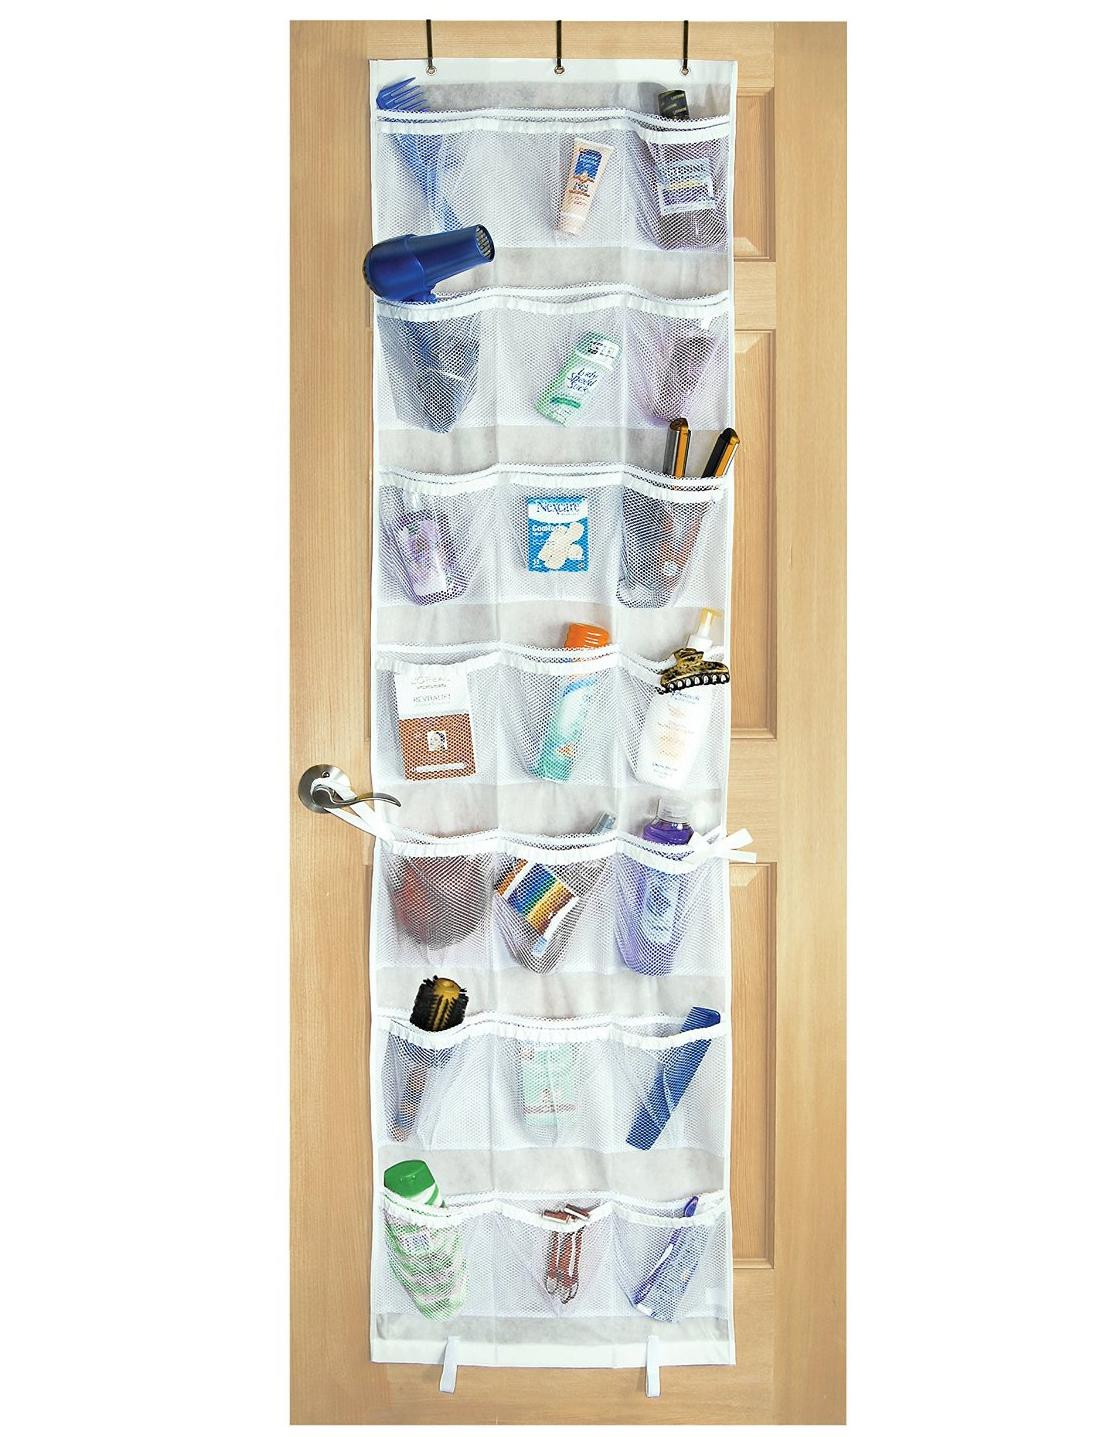 Best ideas about Over The Door Bathroom Organizer
. Save or Pin Amazon Pro Mart DAZZ 42 Pocket Over the Door Now.